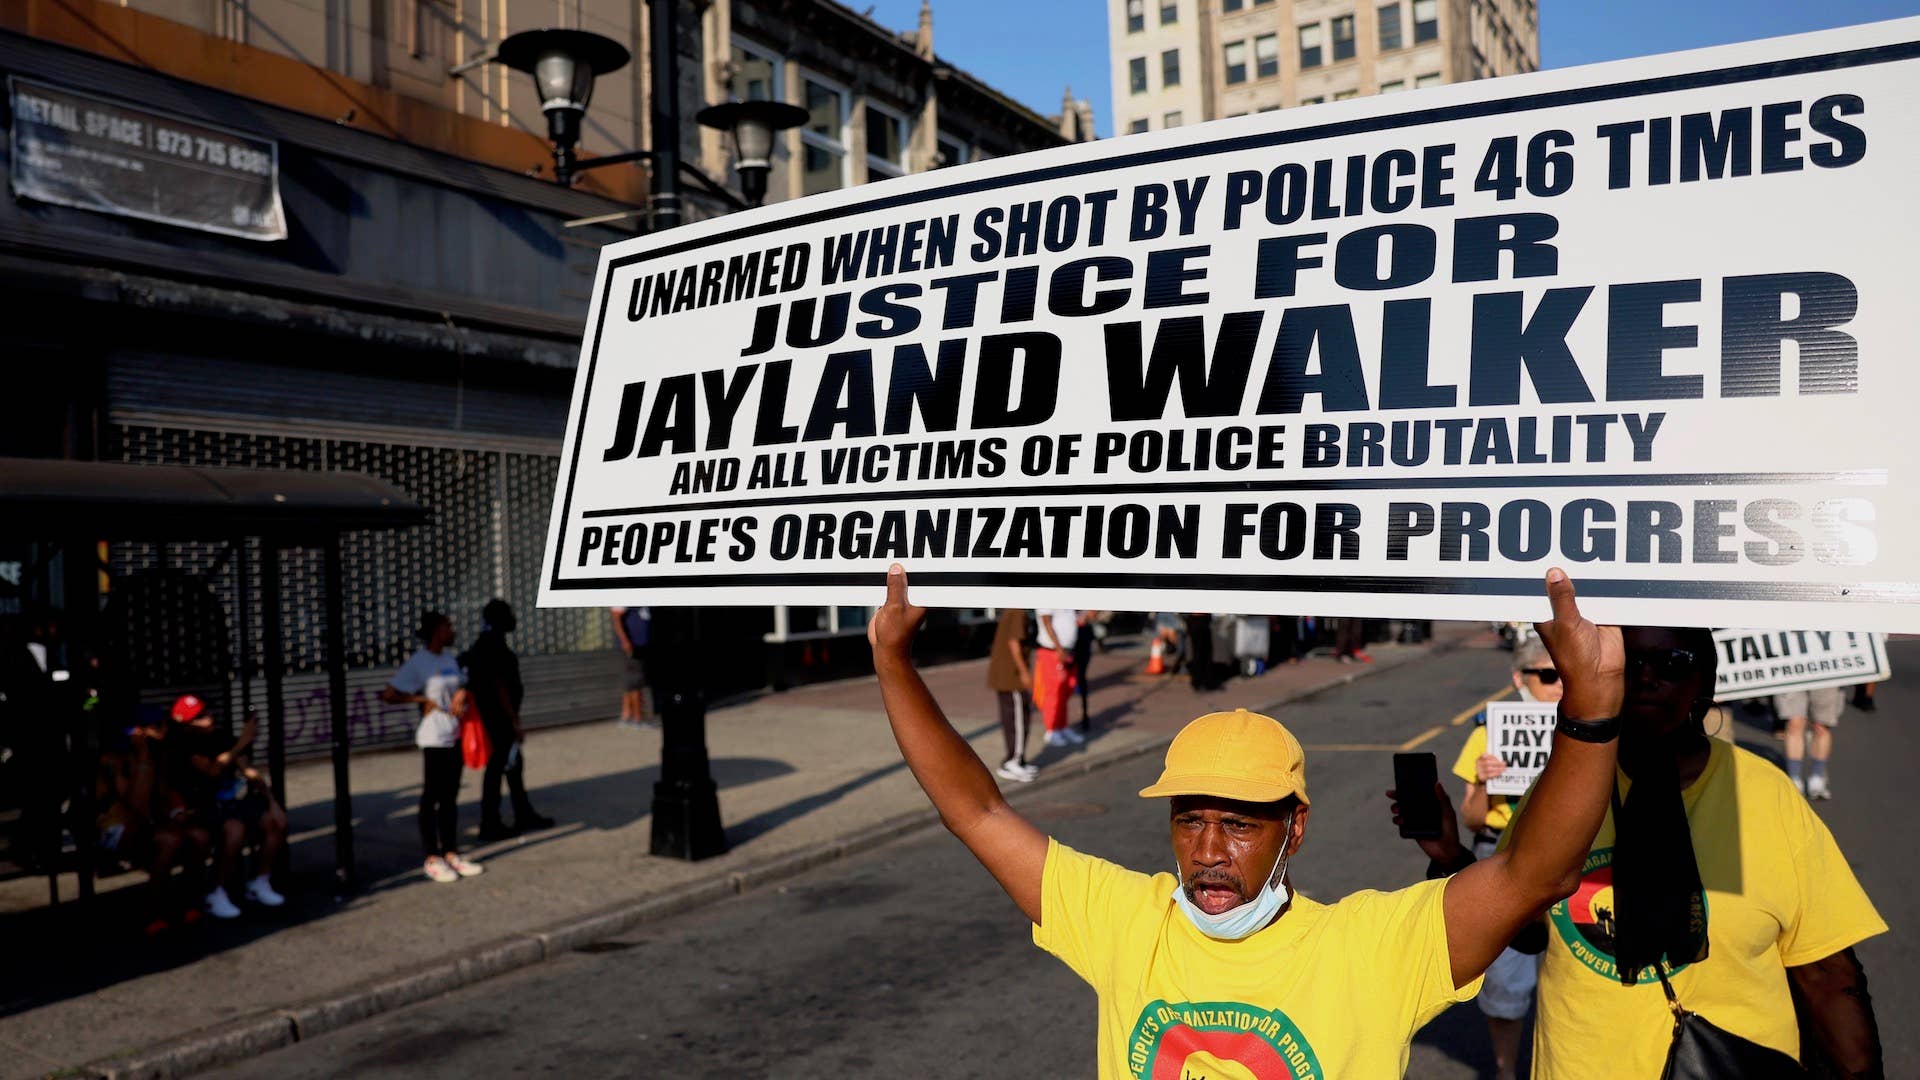 People march demanding justice for Jayland Walker on Market Street